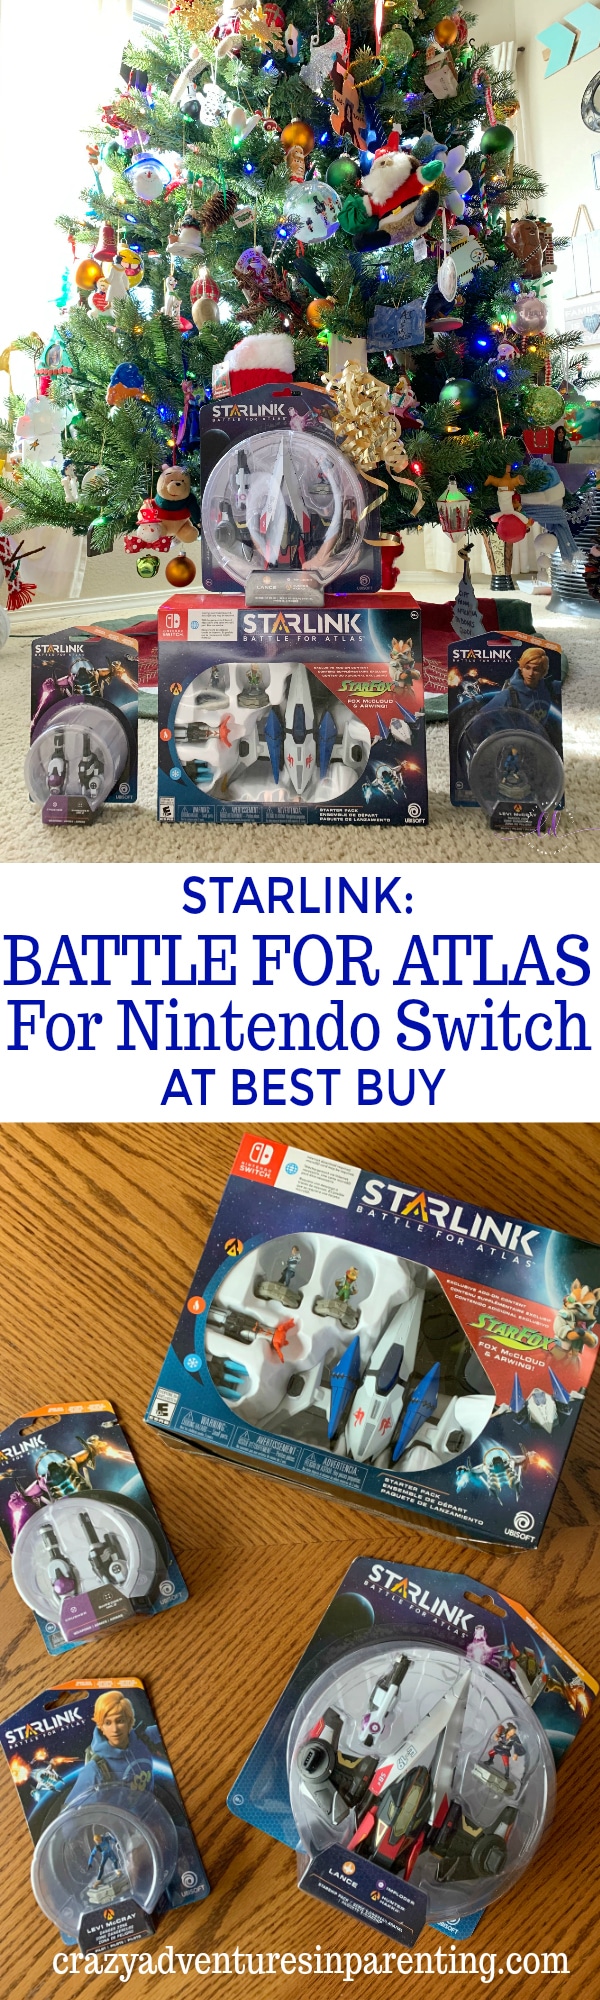 Starlink Battle for Atlas for Nintendo Switch at Best Buy